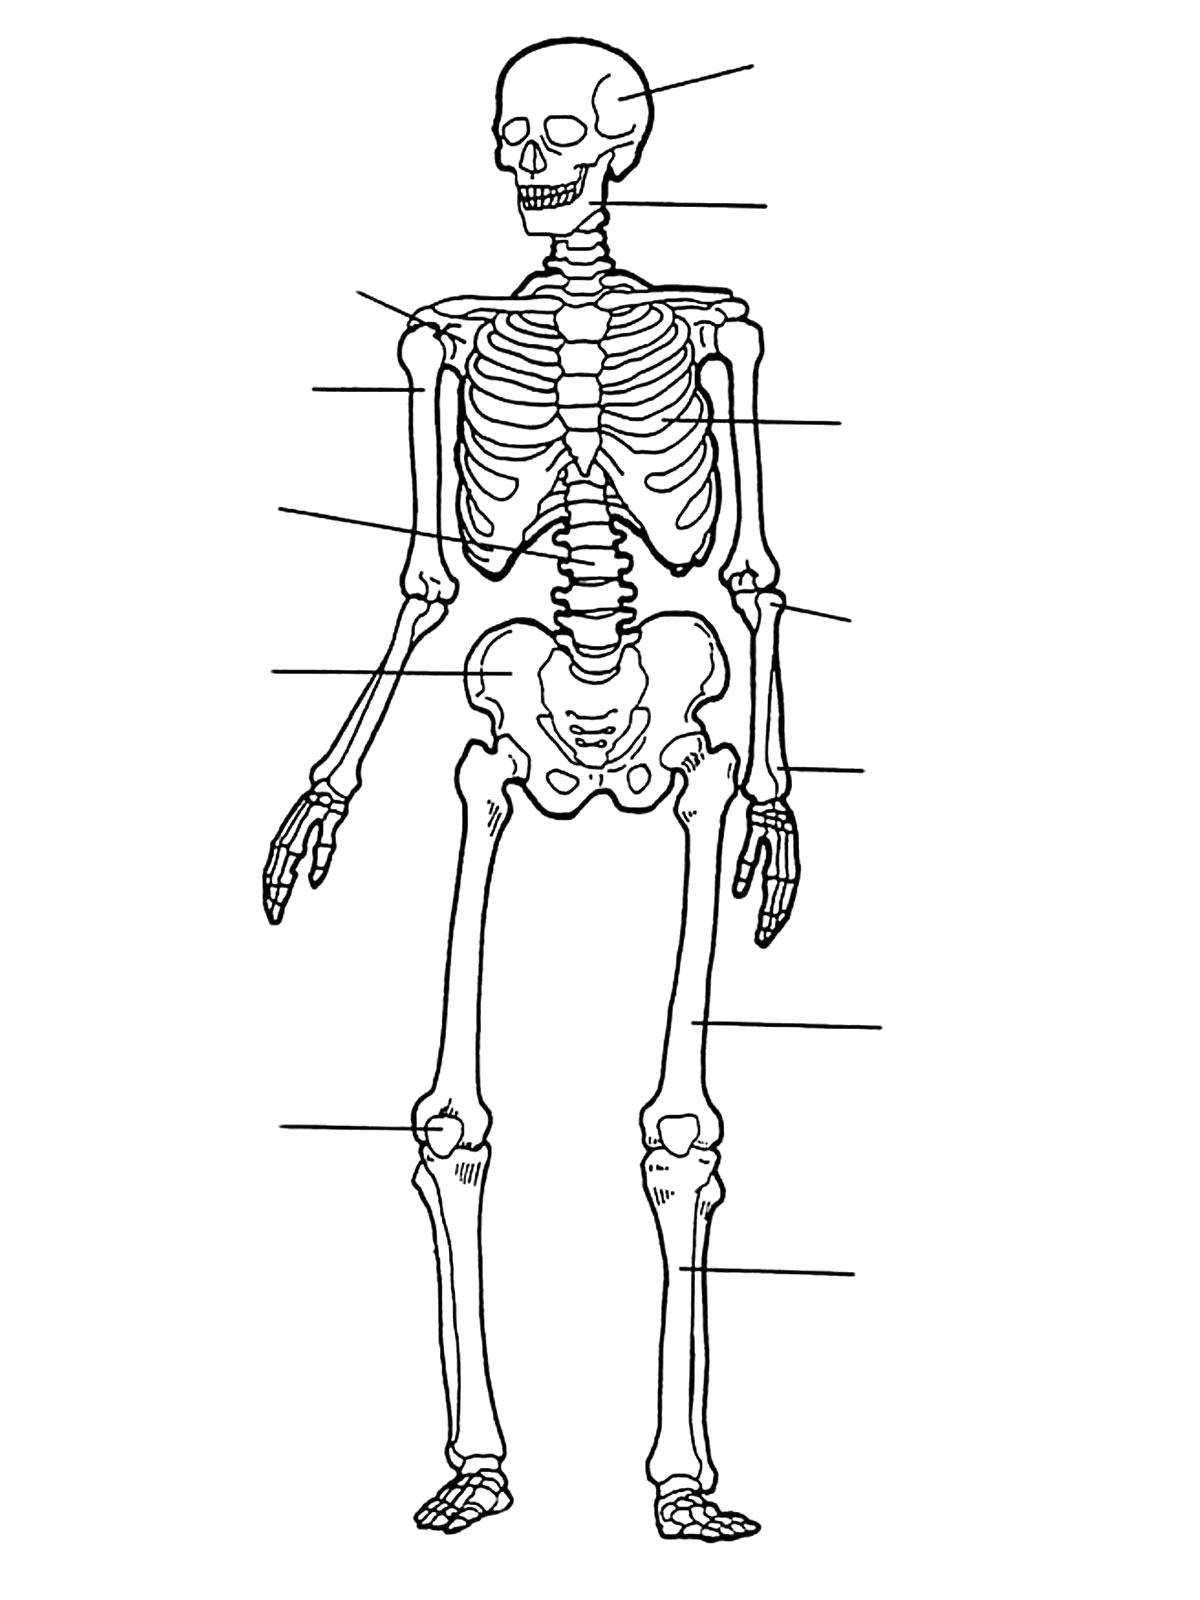 Название: Раскраска Строение тела, скелет. Категория: Строение тела. Теги: скелет.